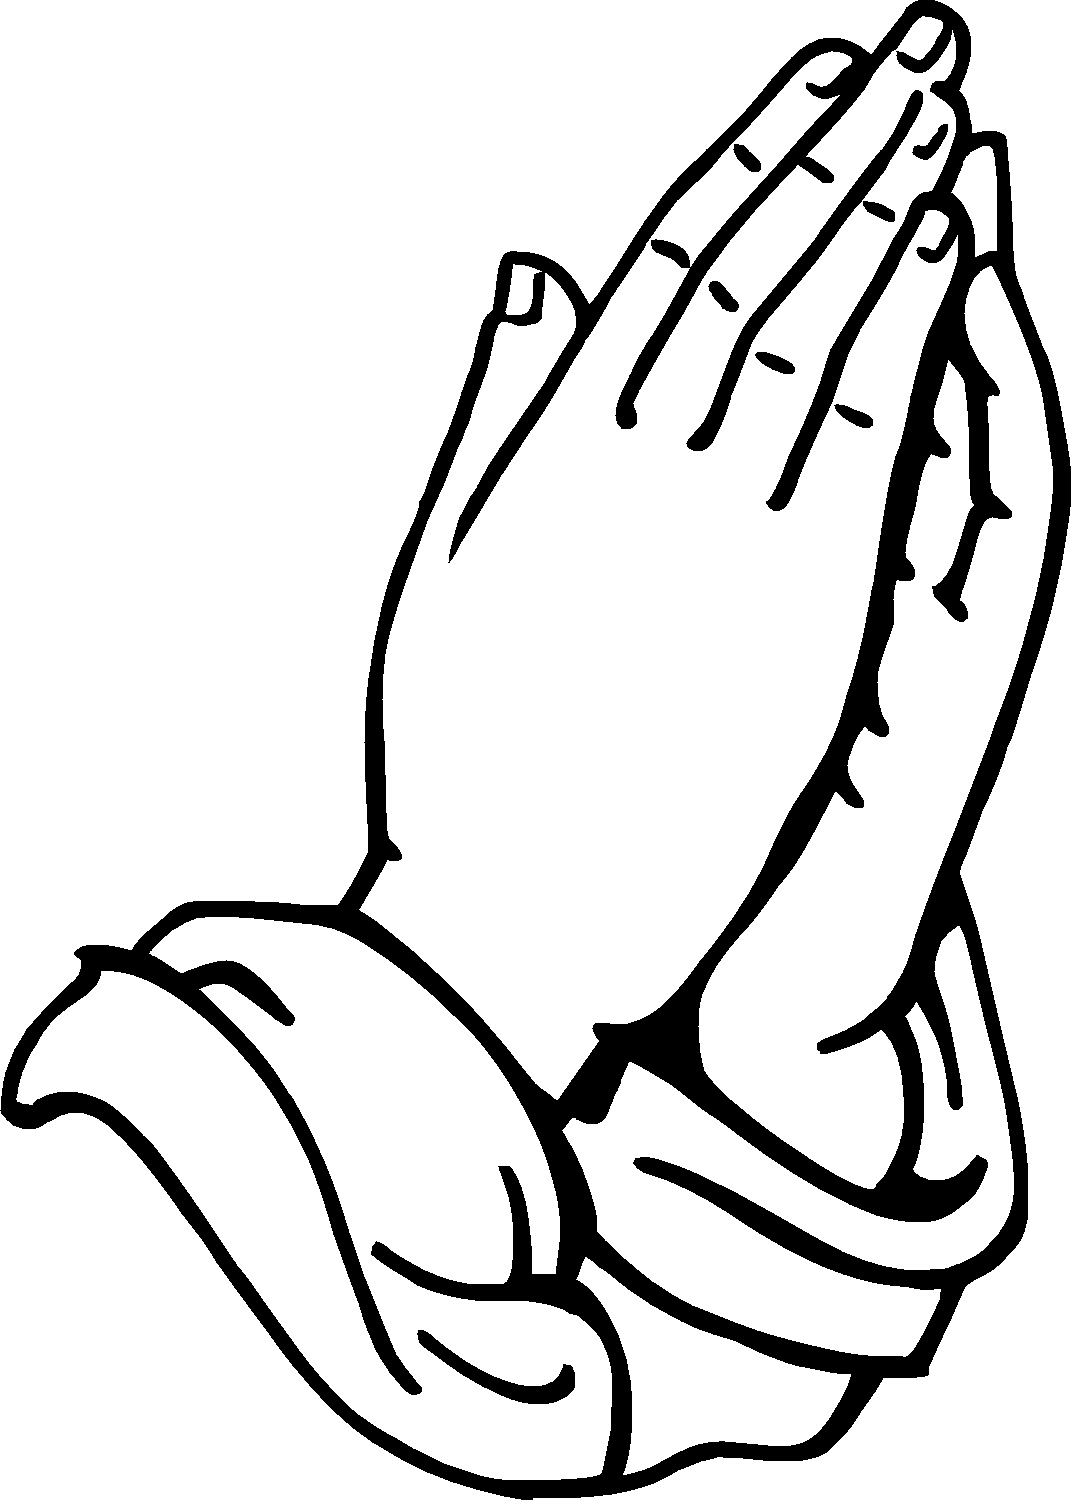 Praying Hands02